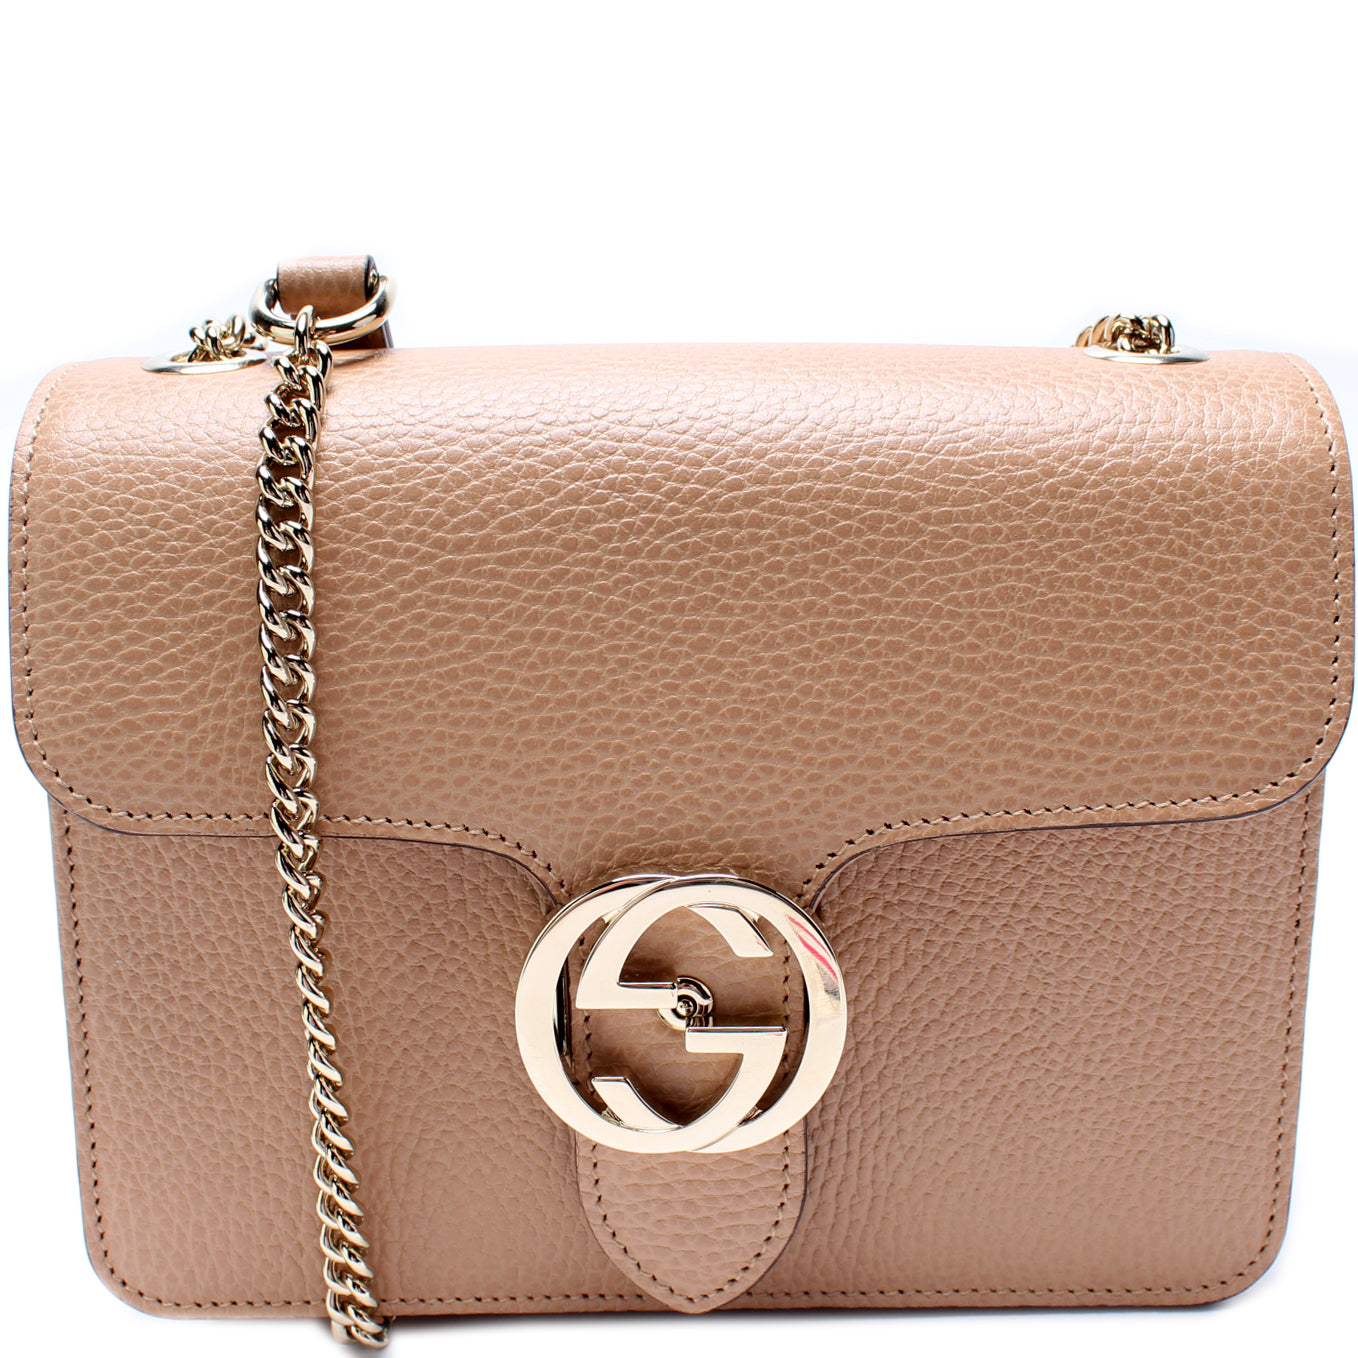 Gucci Pink Pebbled Leather Interlocking G Small Shoulder Bag